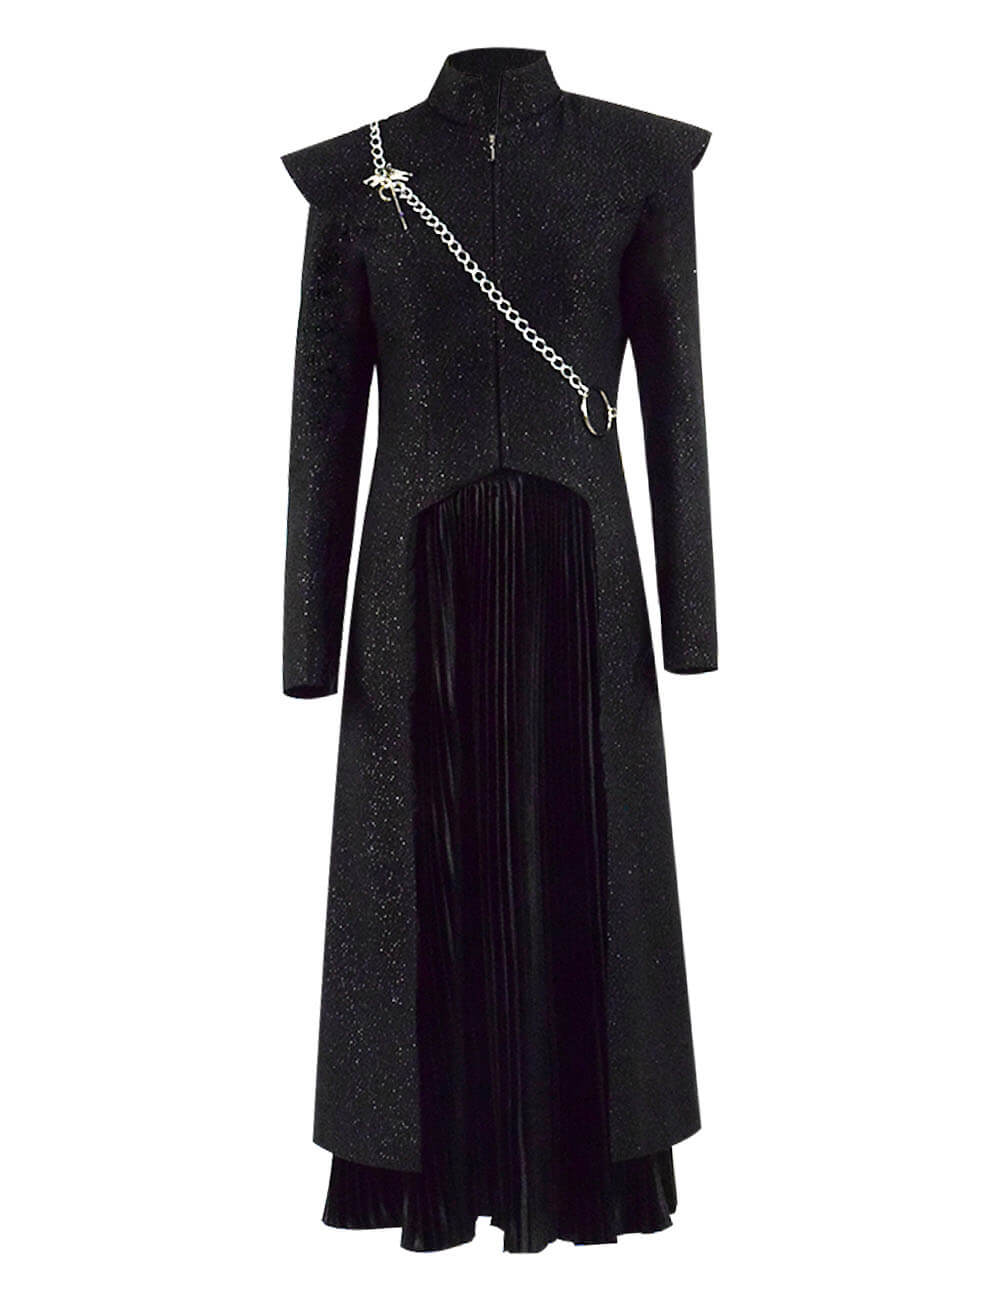 Game of Thrones Costume Mother of Dragons Daenerys Targaryen Queen Dress Suit - ACcosplay